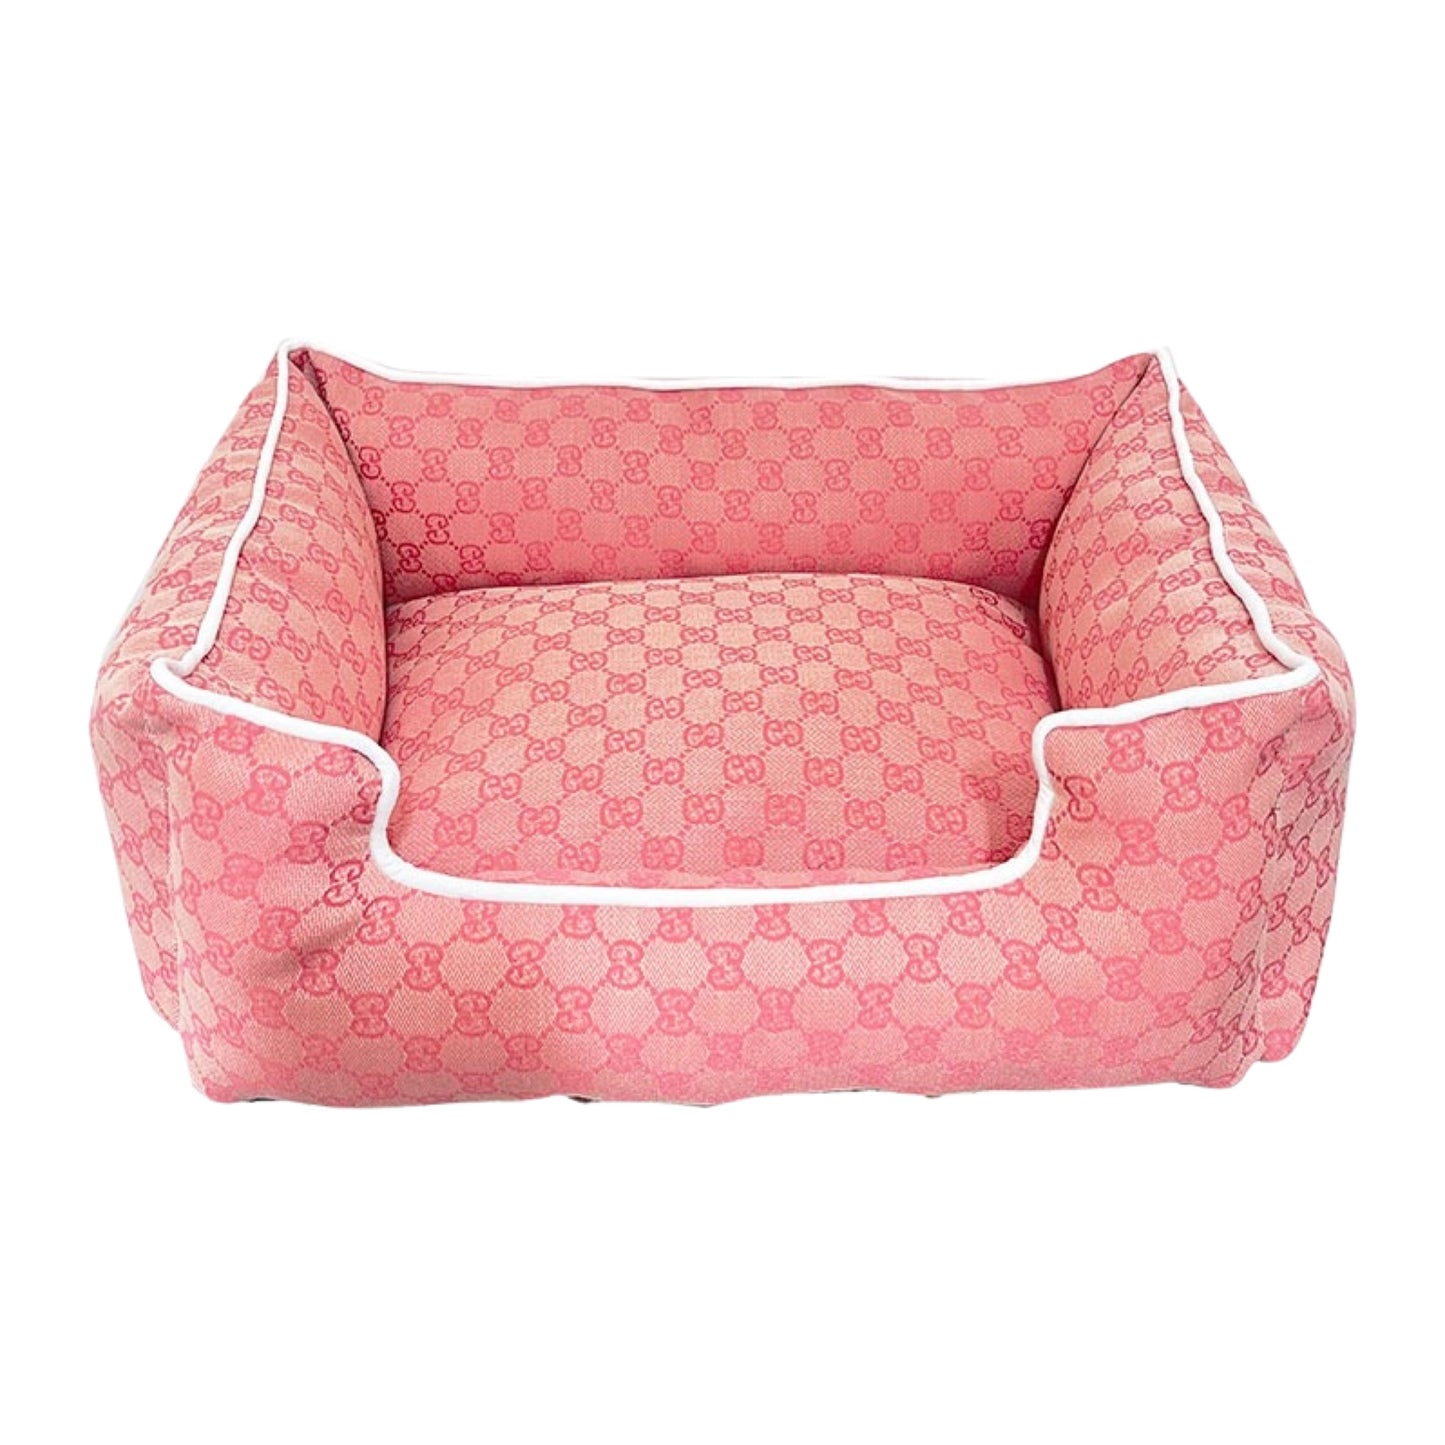 Gucci GG Canvas Dog Bed - Brown Pet Accessories, Decor & Accessories -  GUC105198